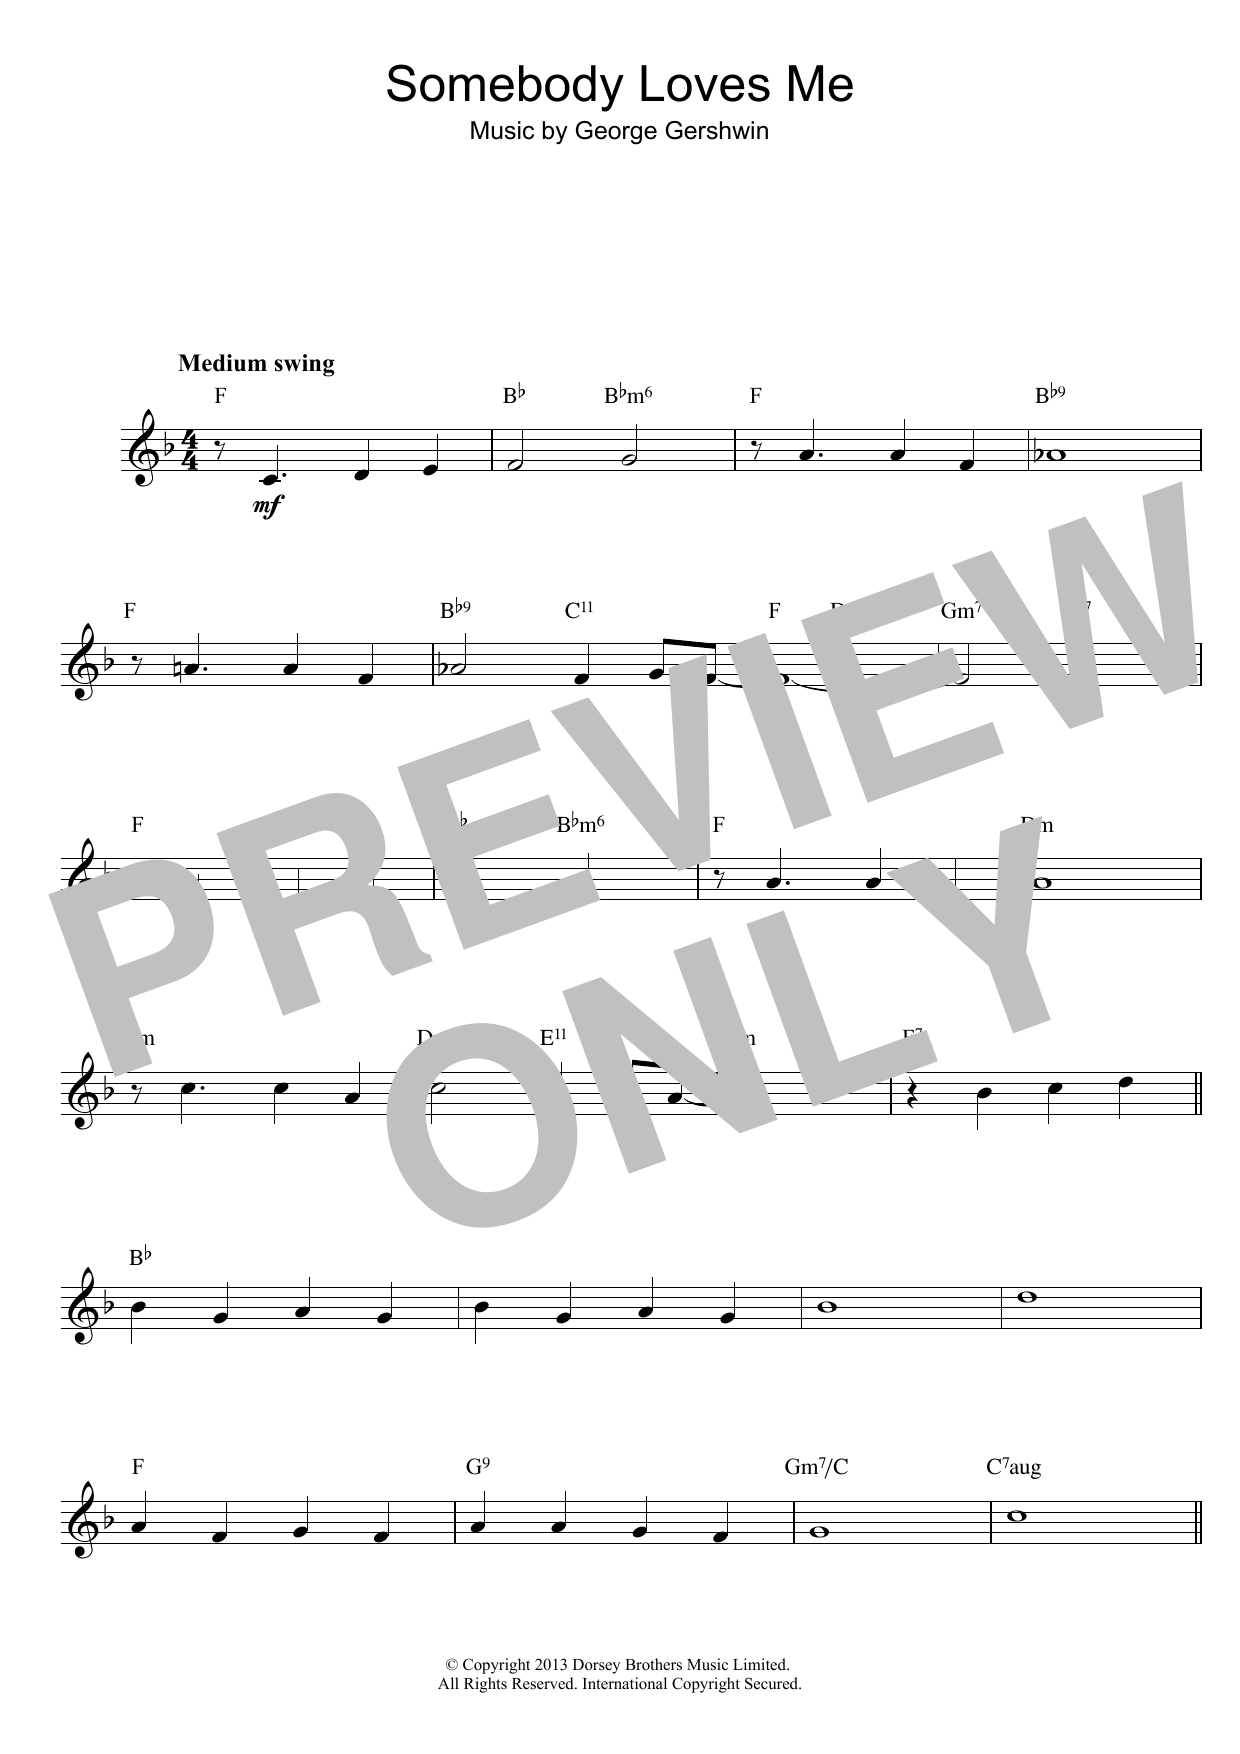 George Gershwin Somebody Loves Me Sheet Music Notes & Chords for Ukulele - Download or Print PDF